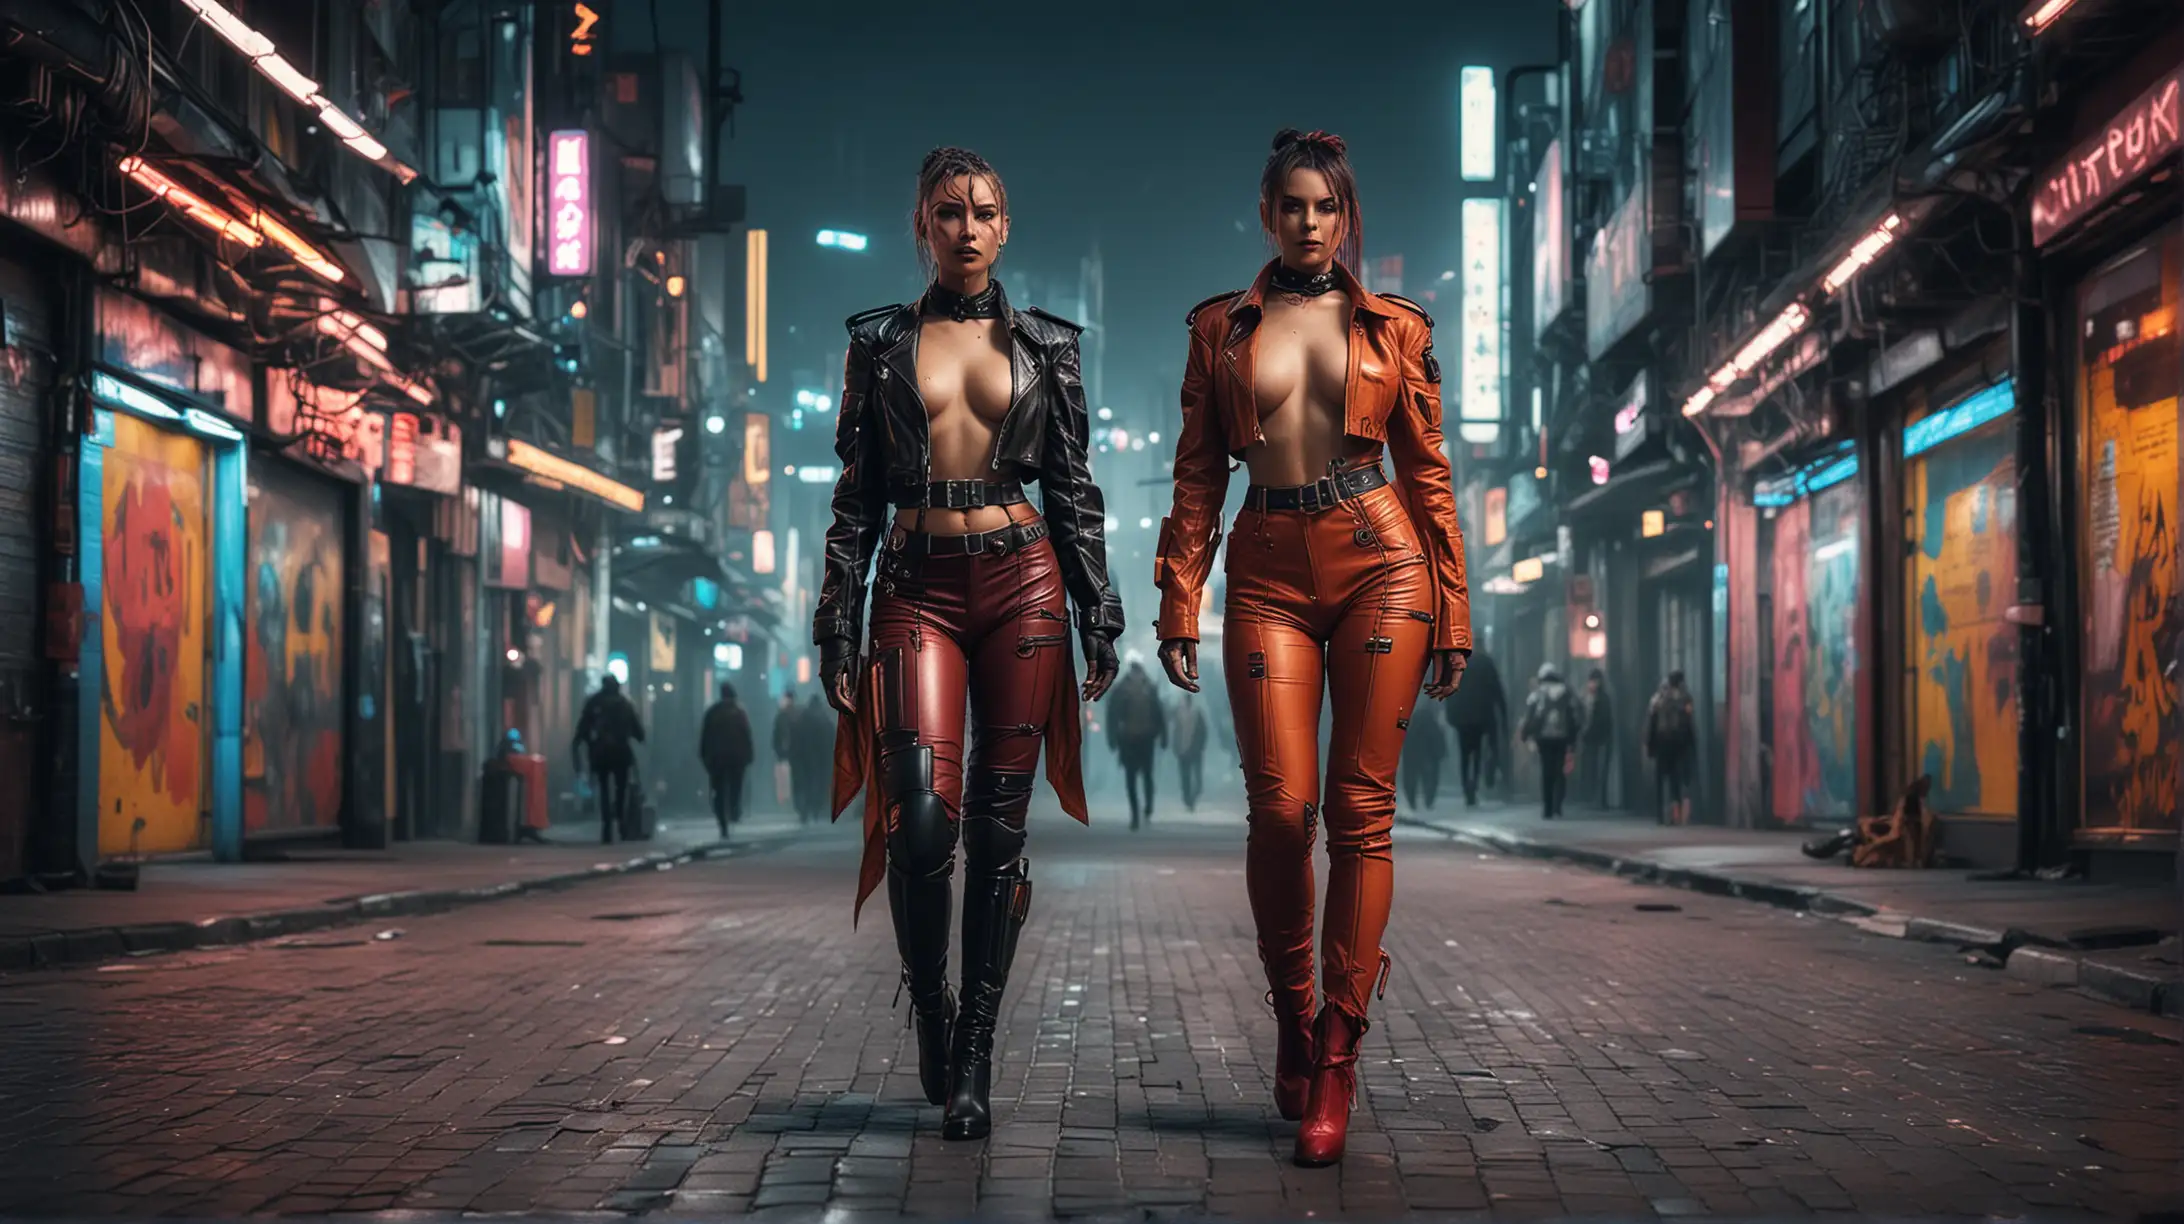 Cyberpunk Women in Colorful Leather Uniforms Exploring a Futuristic Cityscape